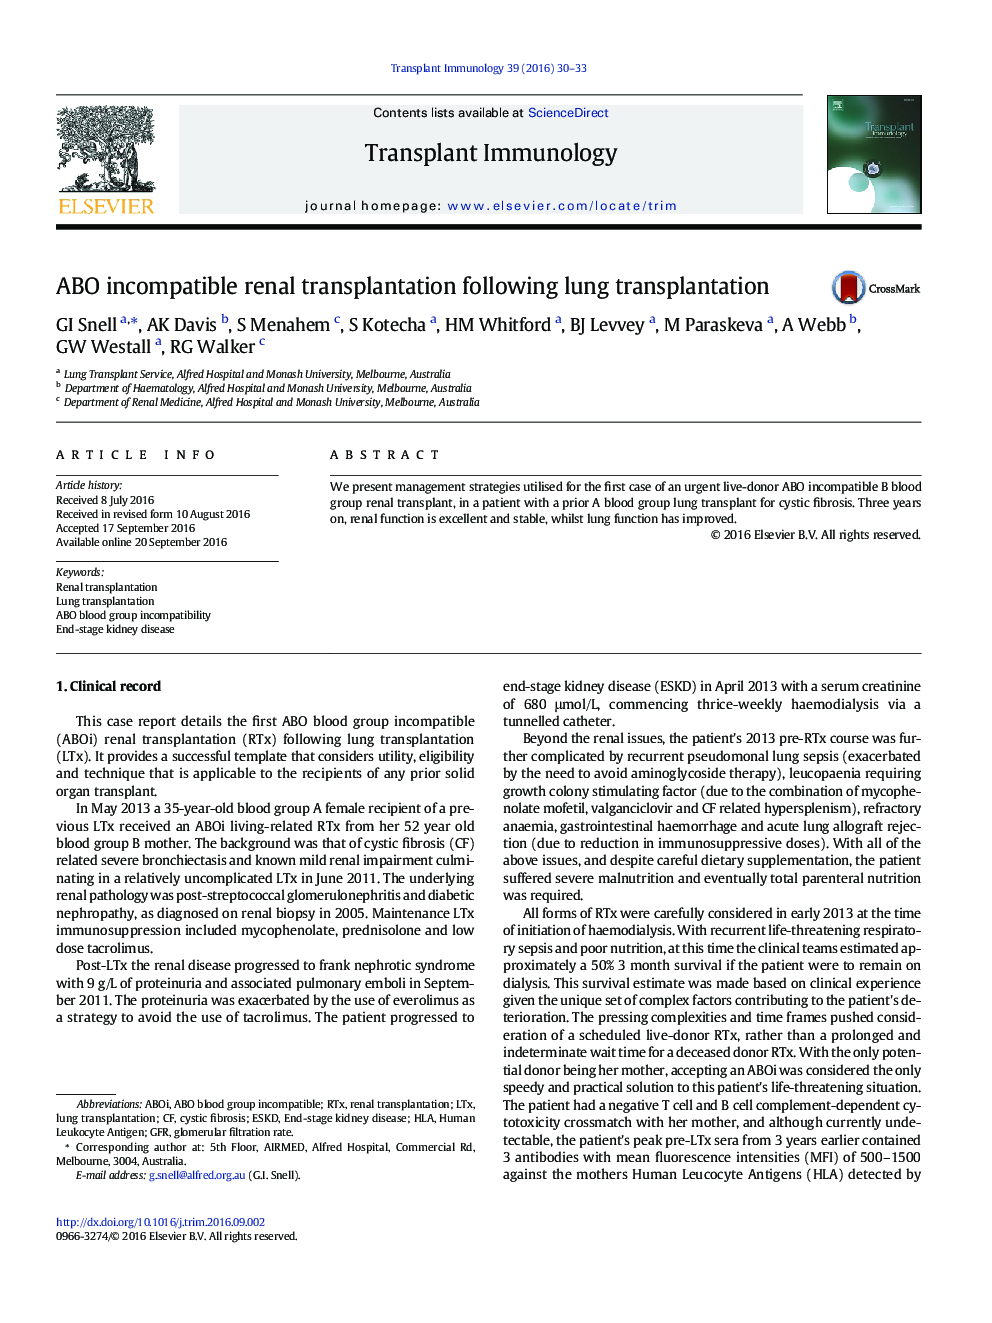 ABO incompatible renal transplantation following lung transplantation